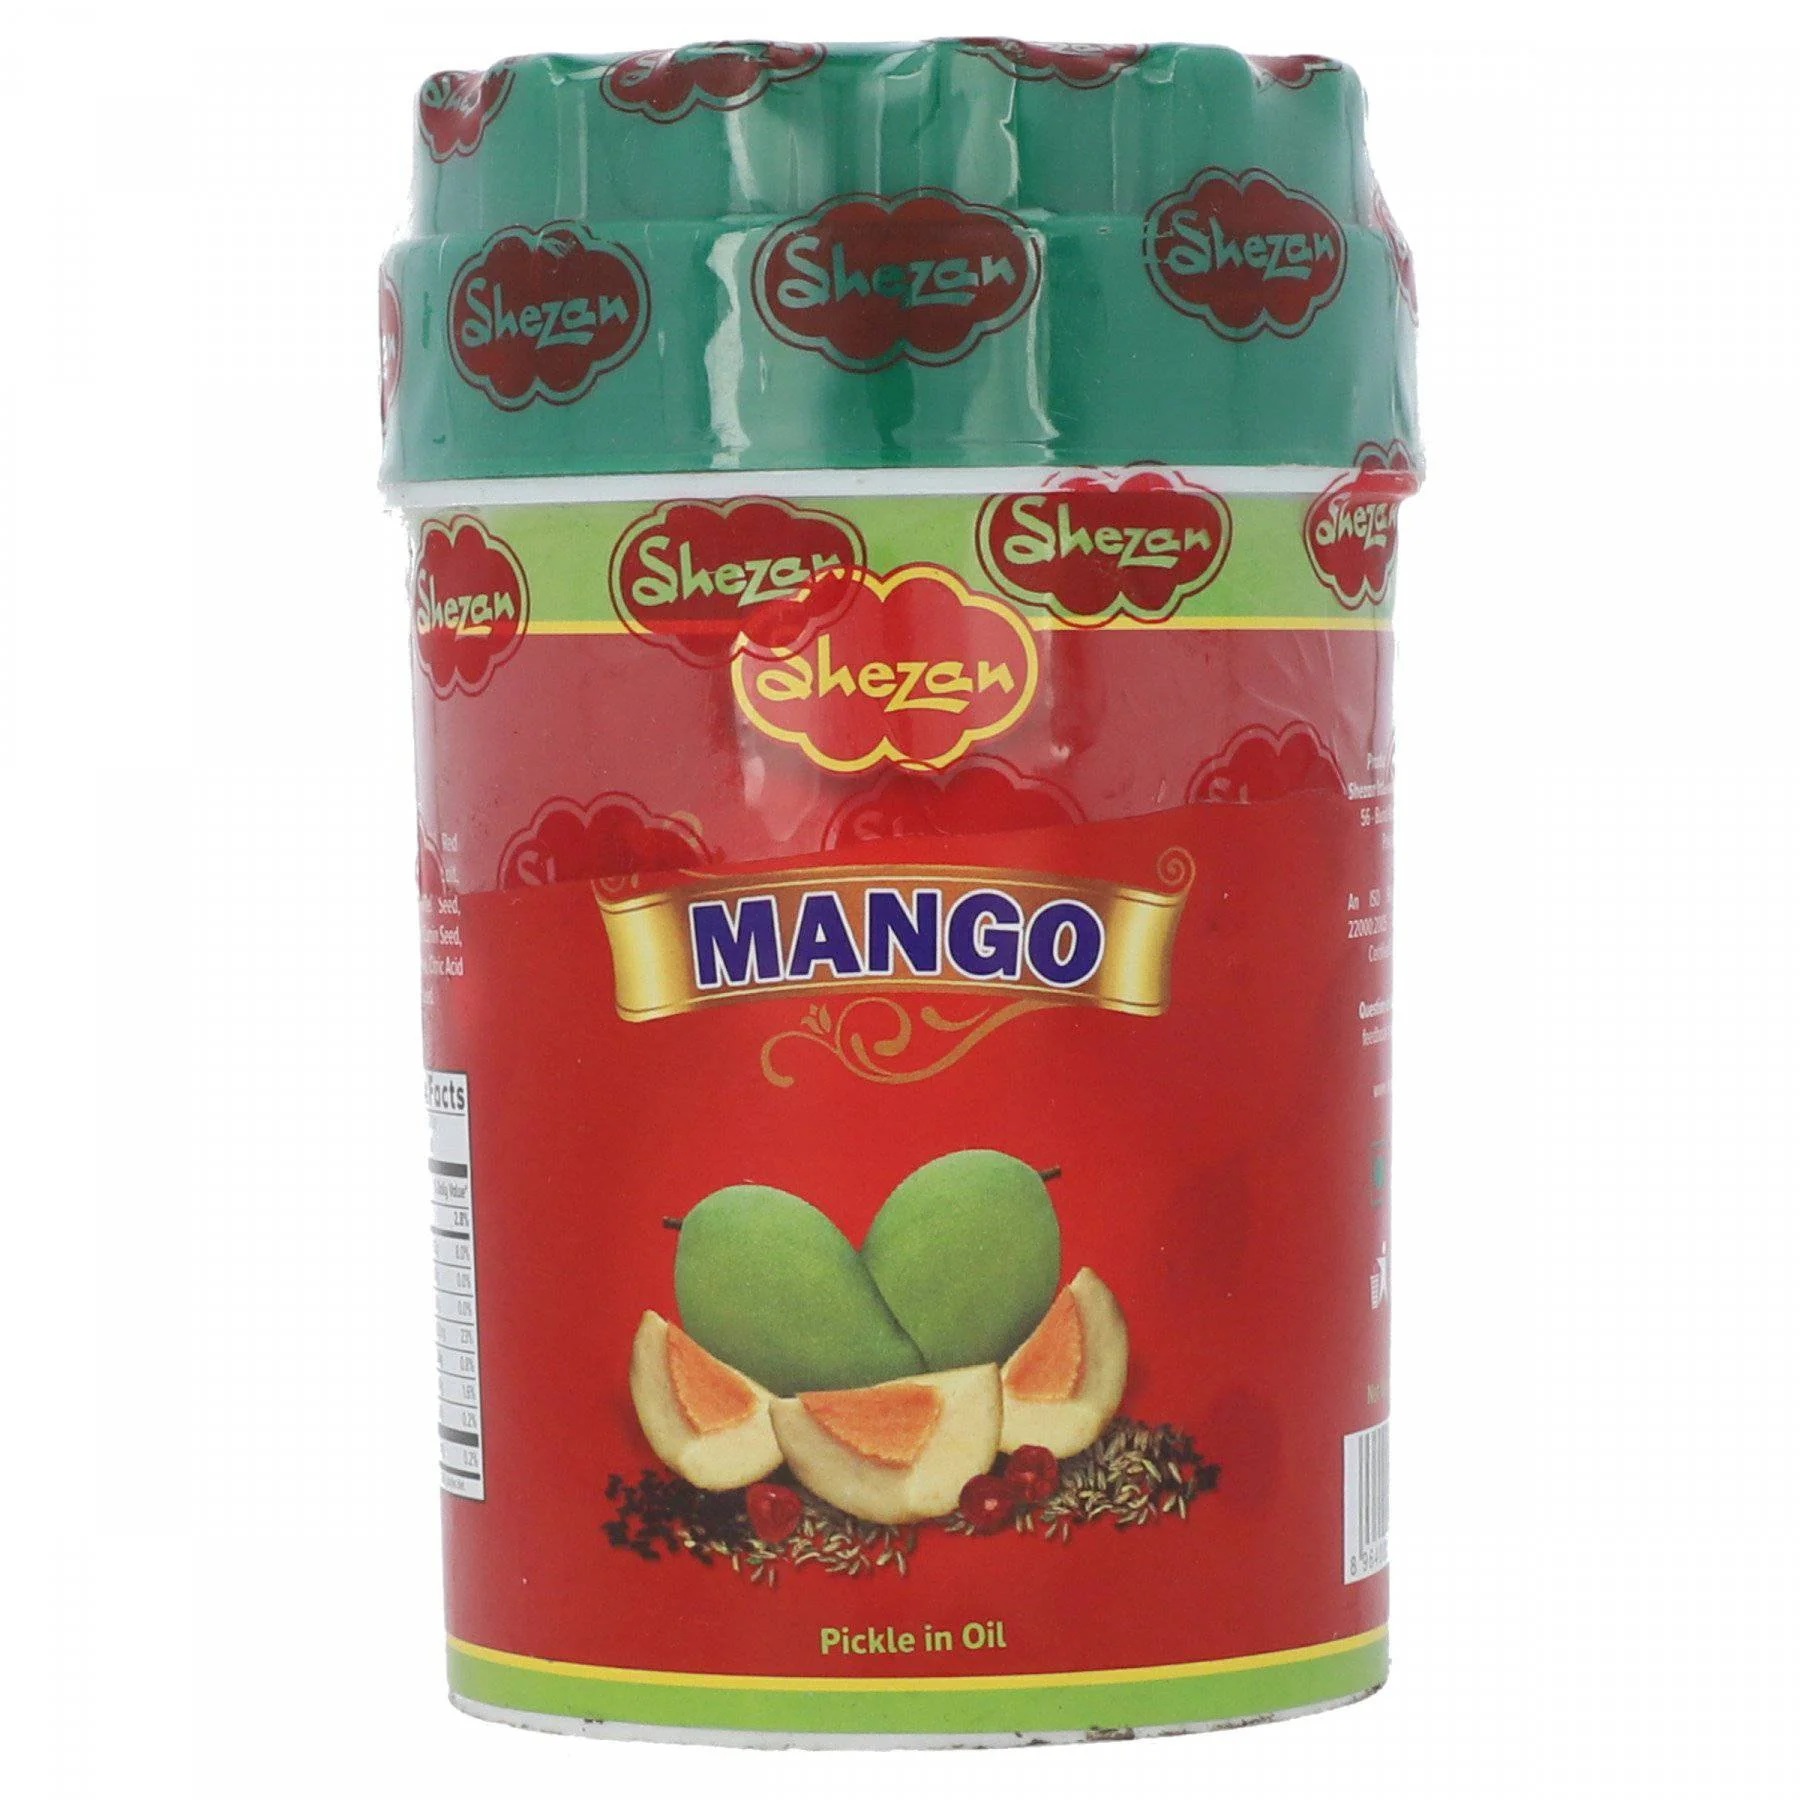 http://atiyasfreshfarm.com/public/storage/photos/1/Banner/umer/shezan-international-limited-shezan-mango-pickle-in-oil-400g-6954945183873_1800x.jpg